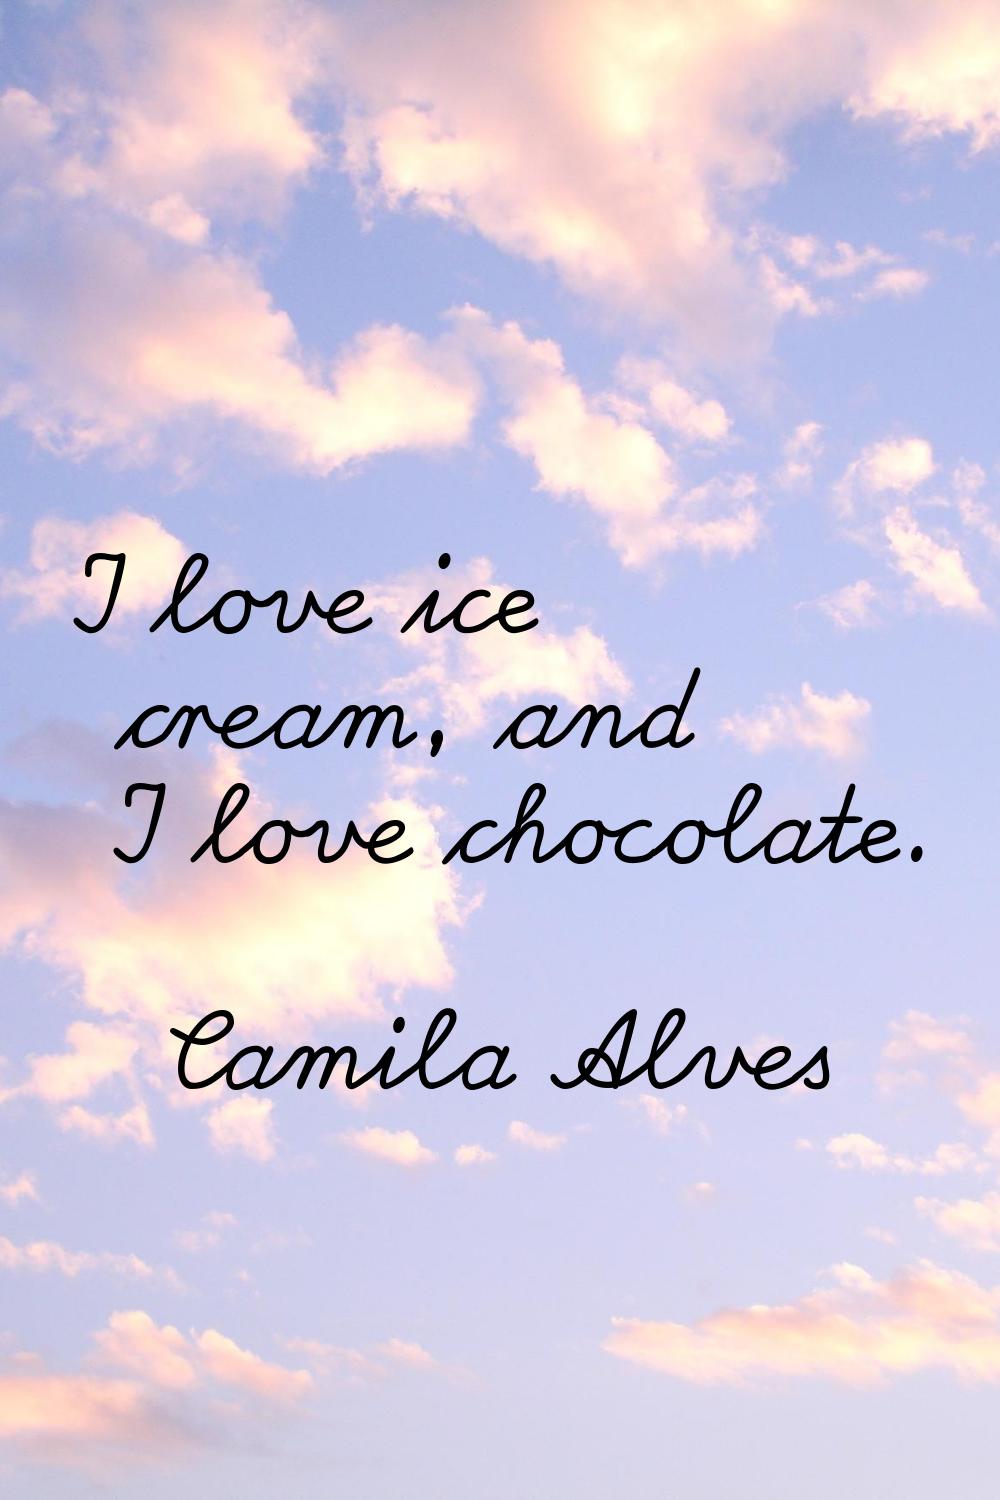 I love ice cream, and I love chocolate.